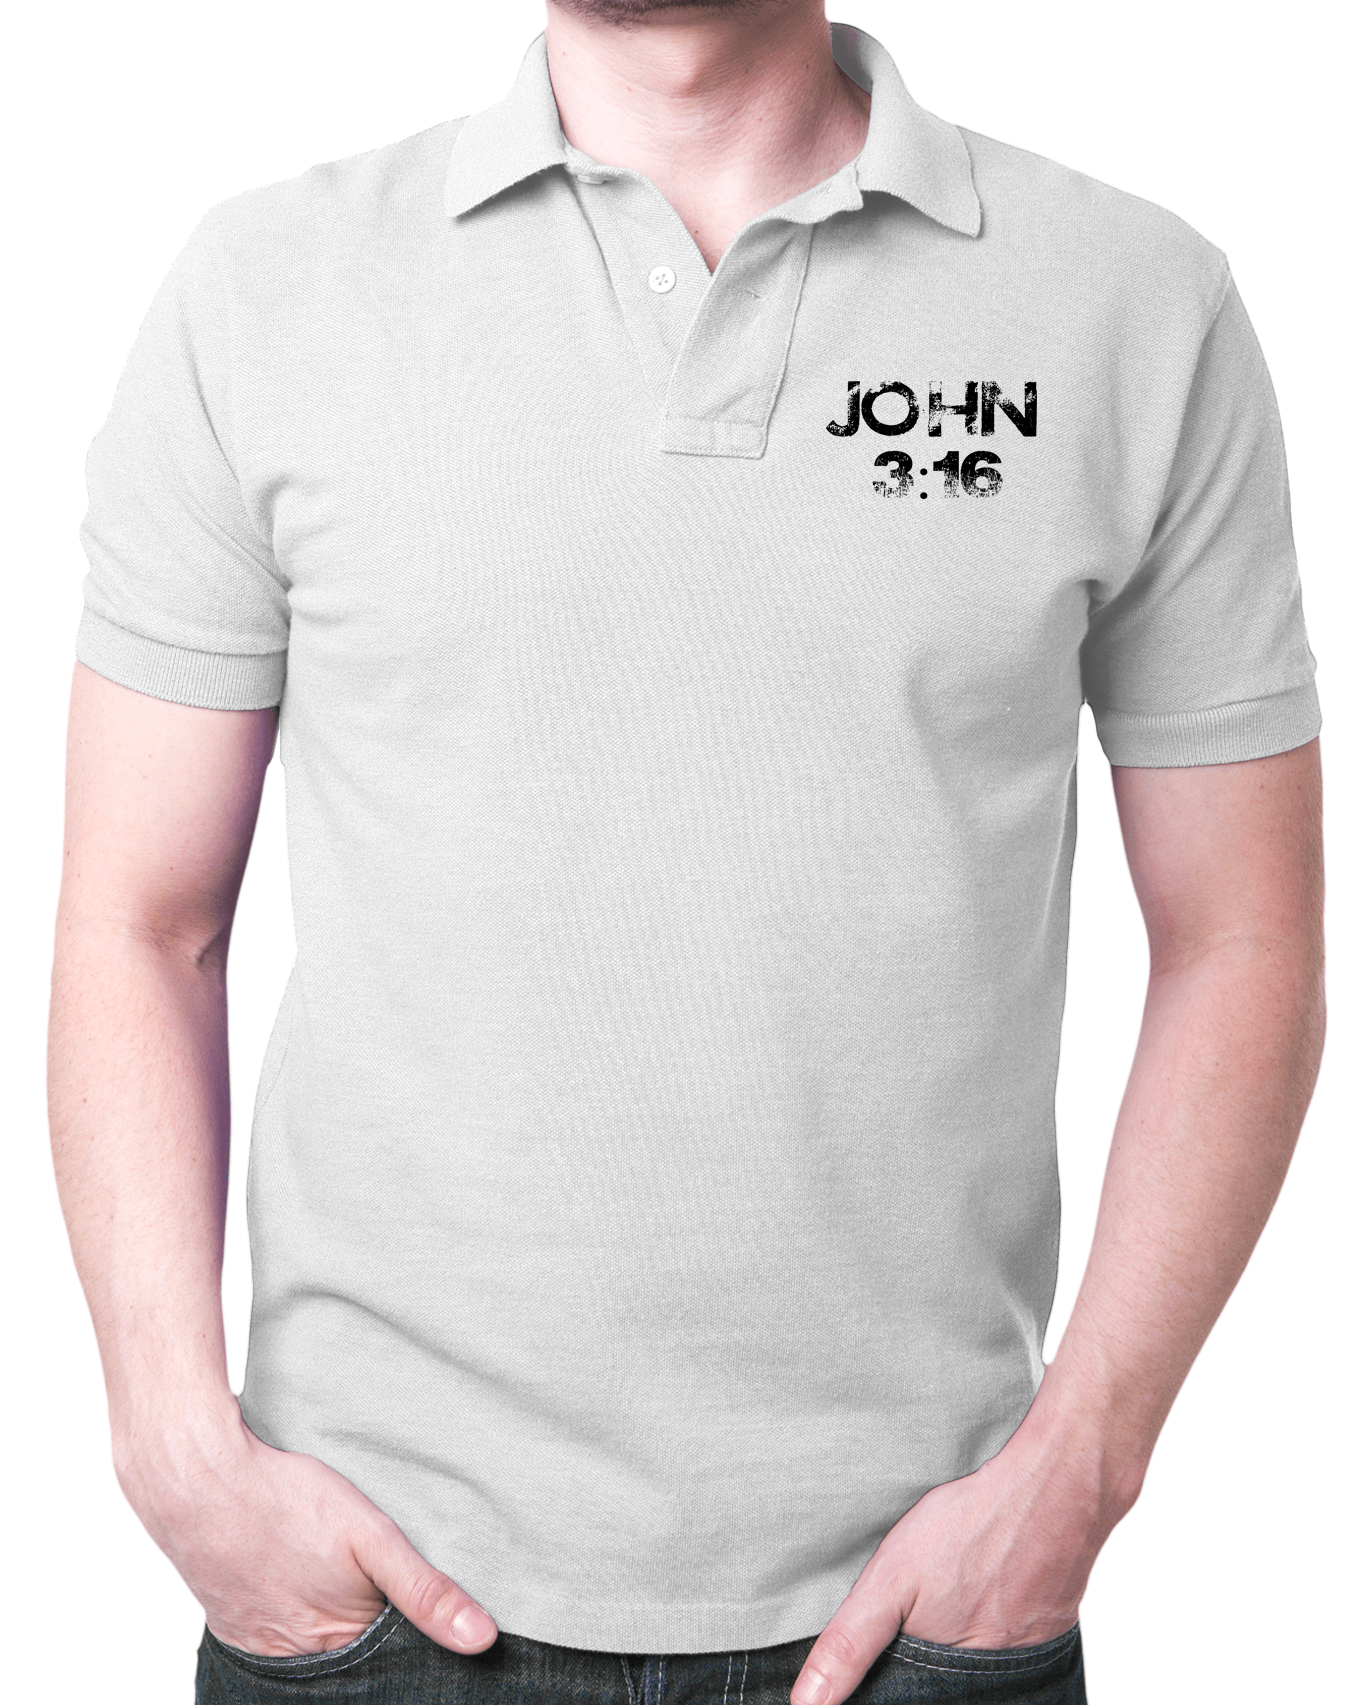 Living Words Men Polo T Shirt S / White John 3:16 - Polo T Shirt